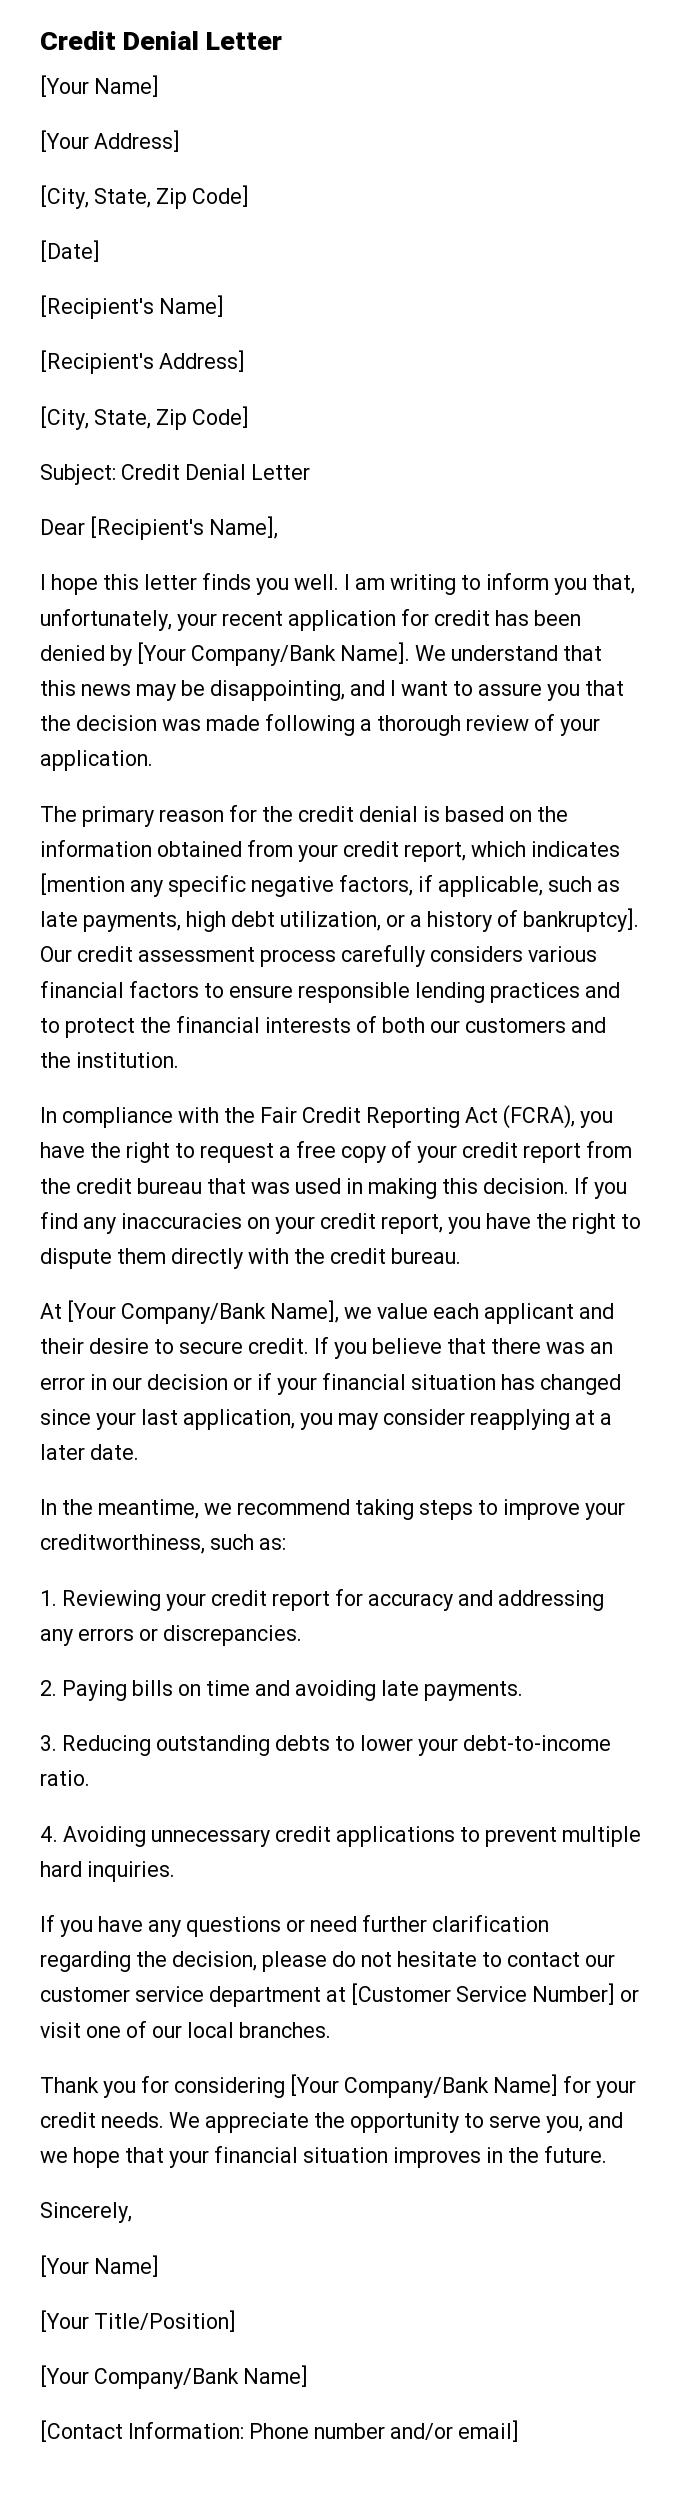 Credit Denial Letter